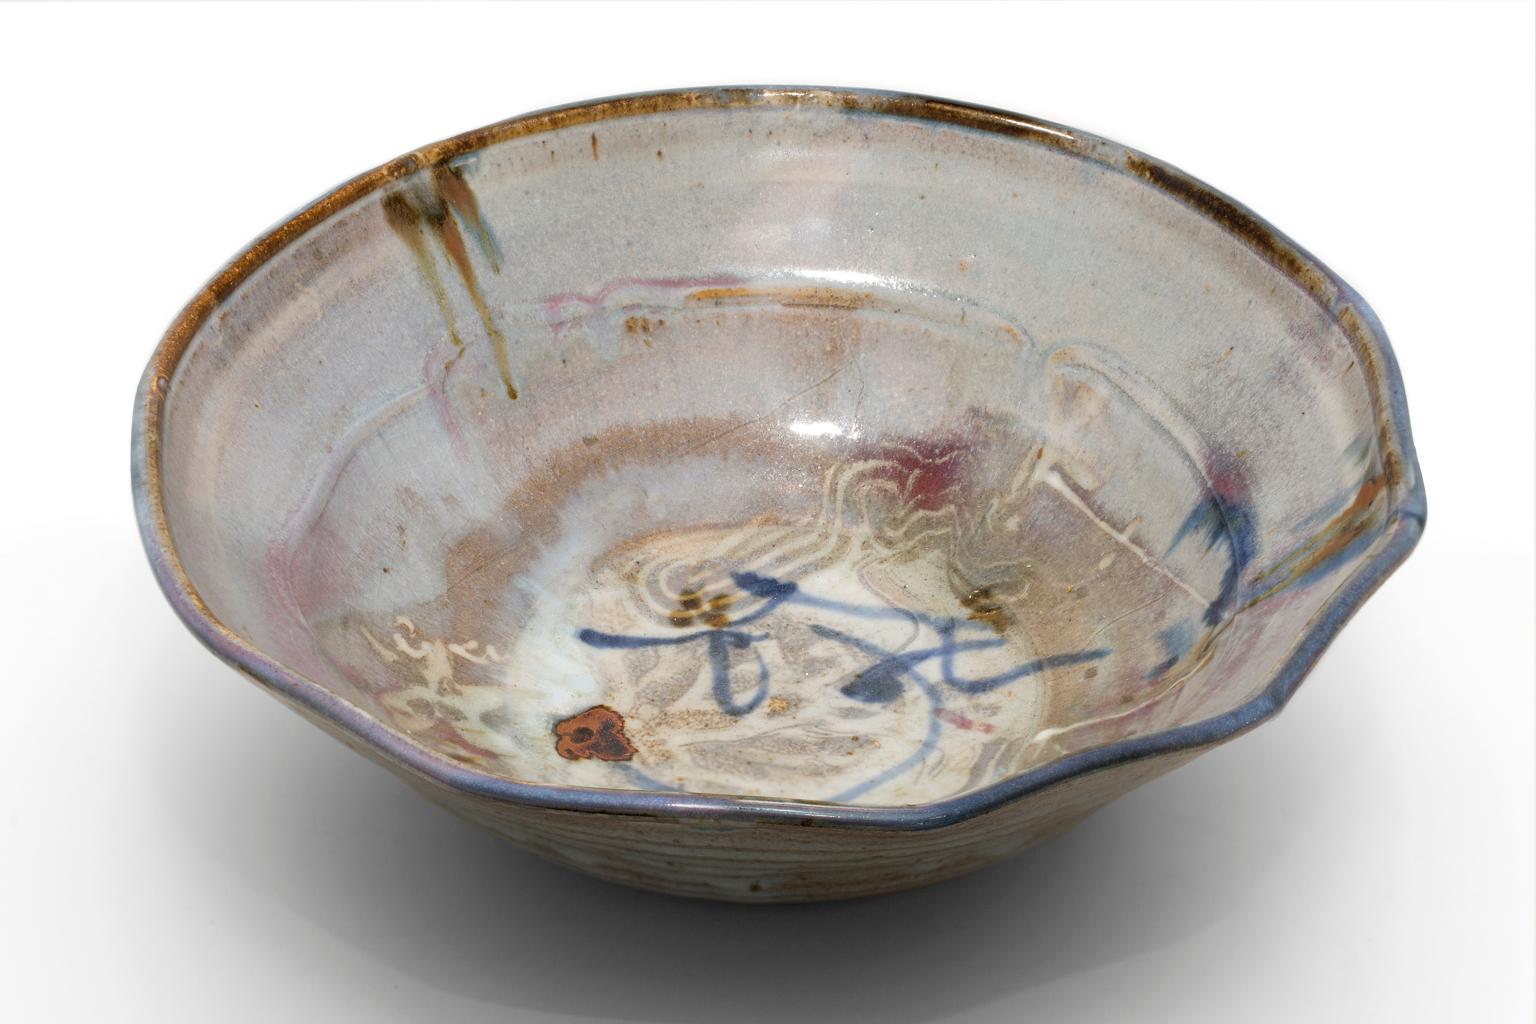 John Glick Plum Street Pottery Glazed Bowl Reduction Fired For Sale 2